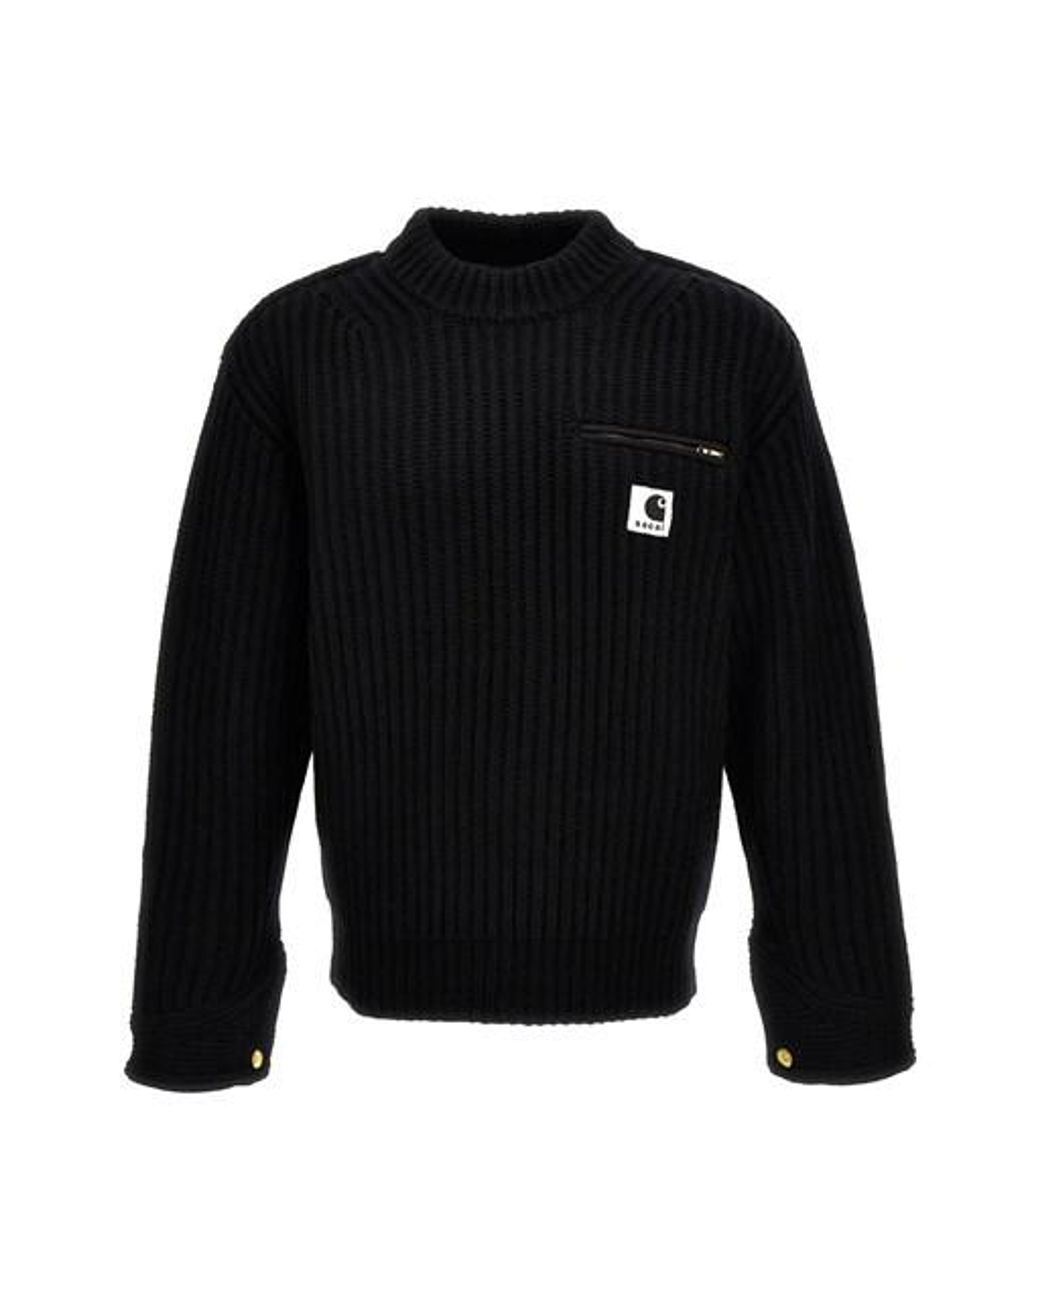 Sacai X Carhartt Wip Sweater in Black for Men | Lyst